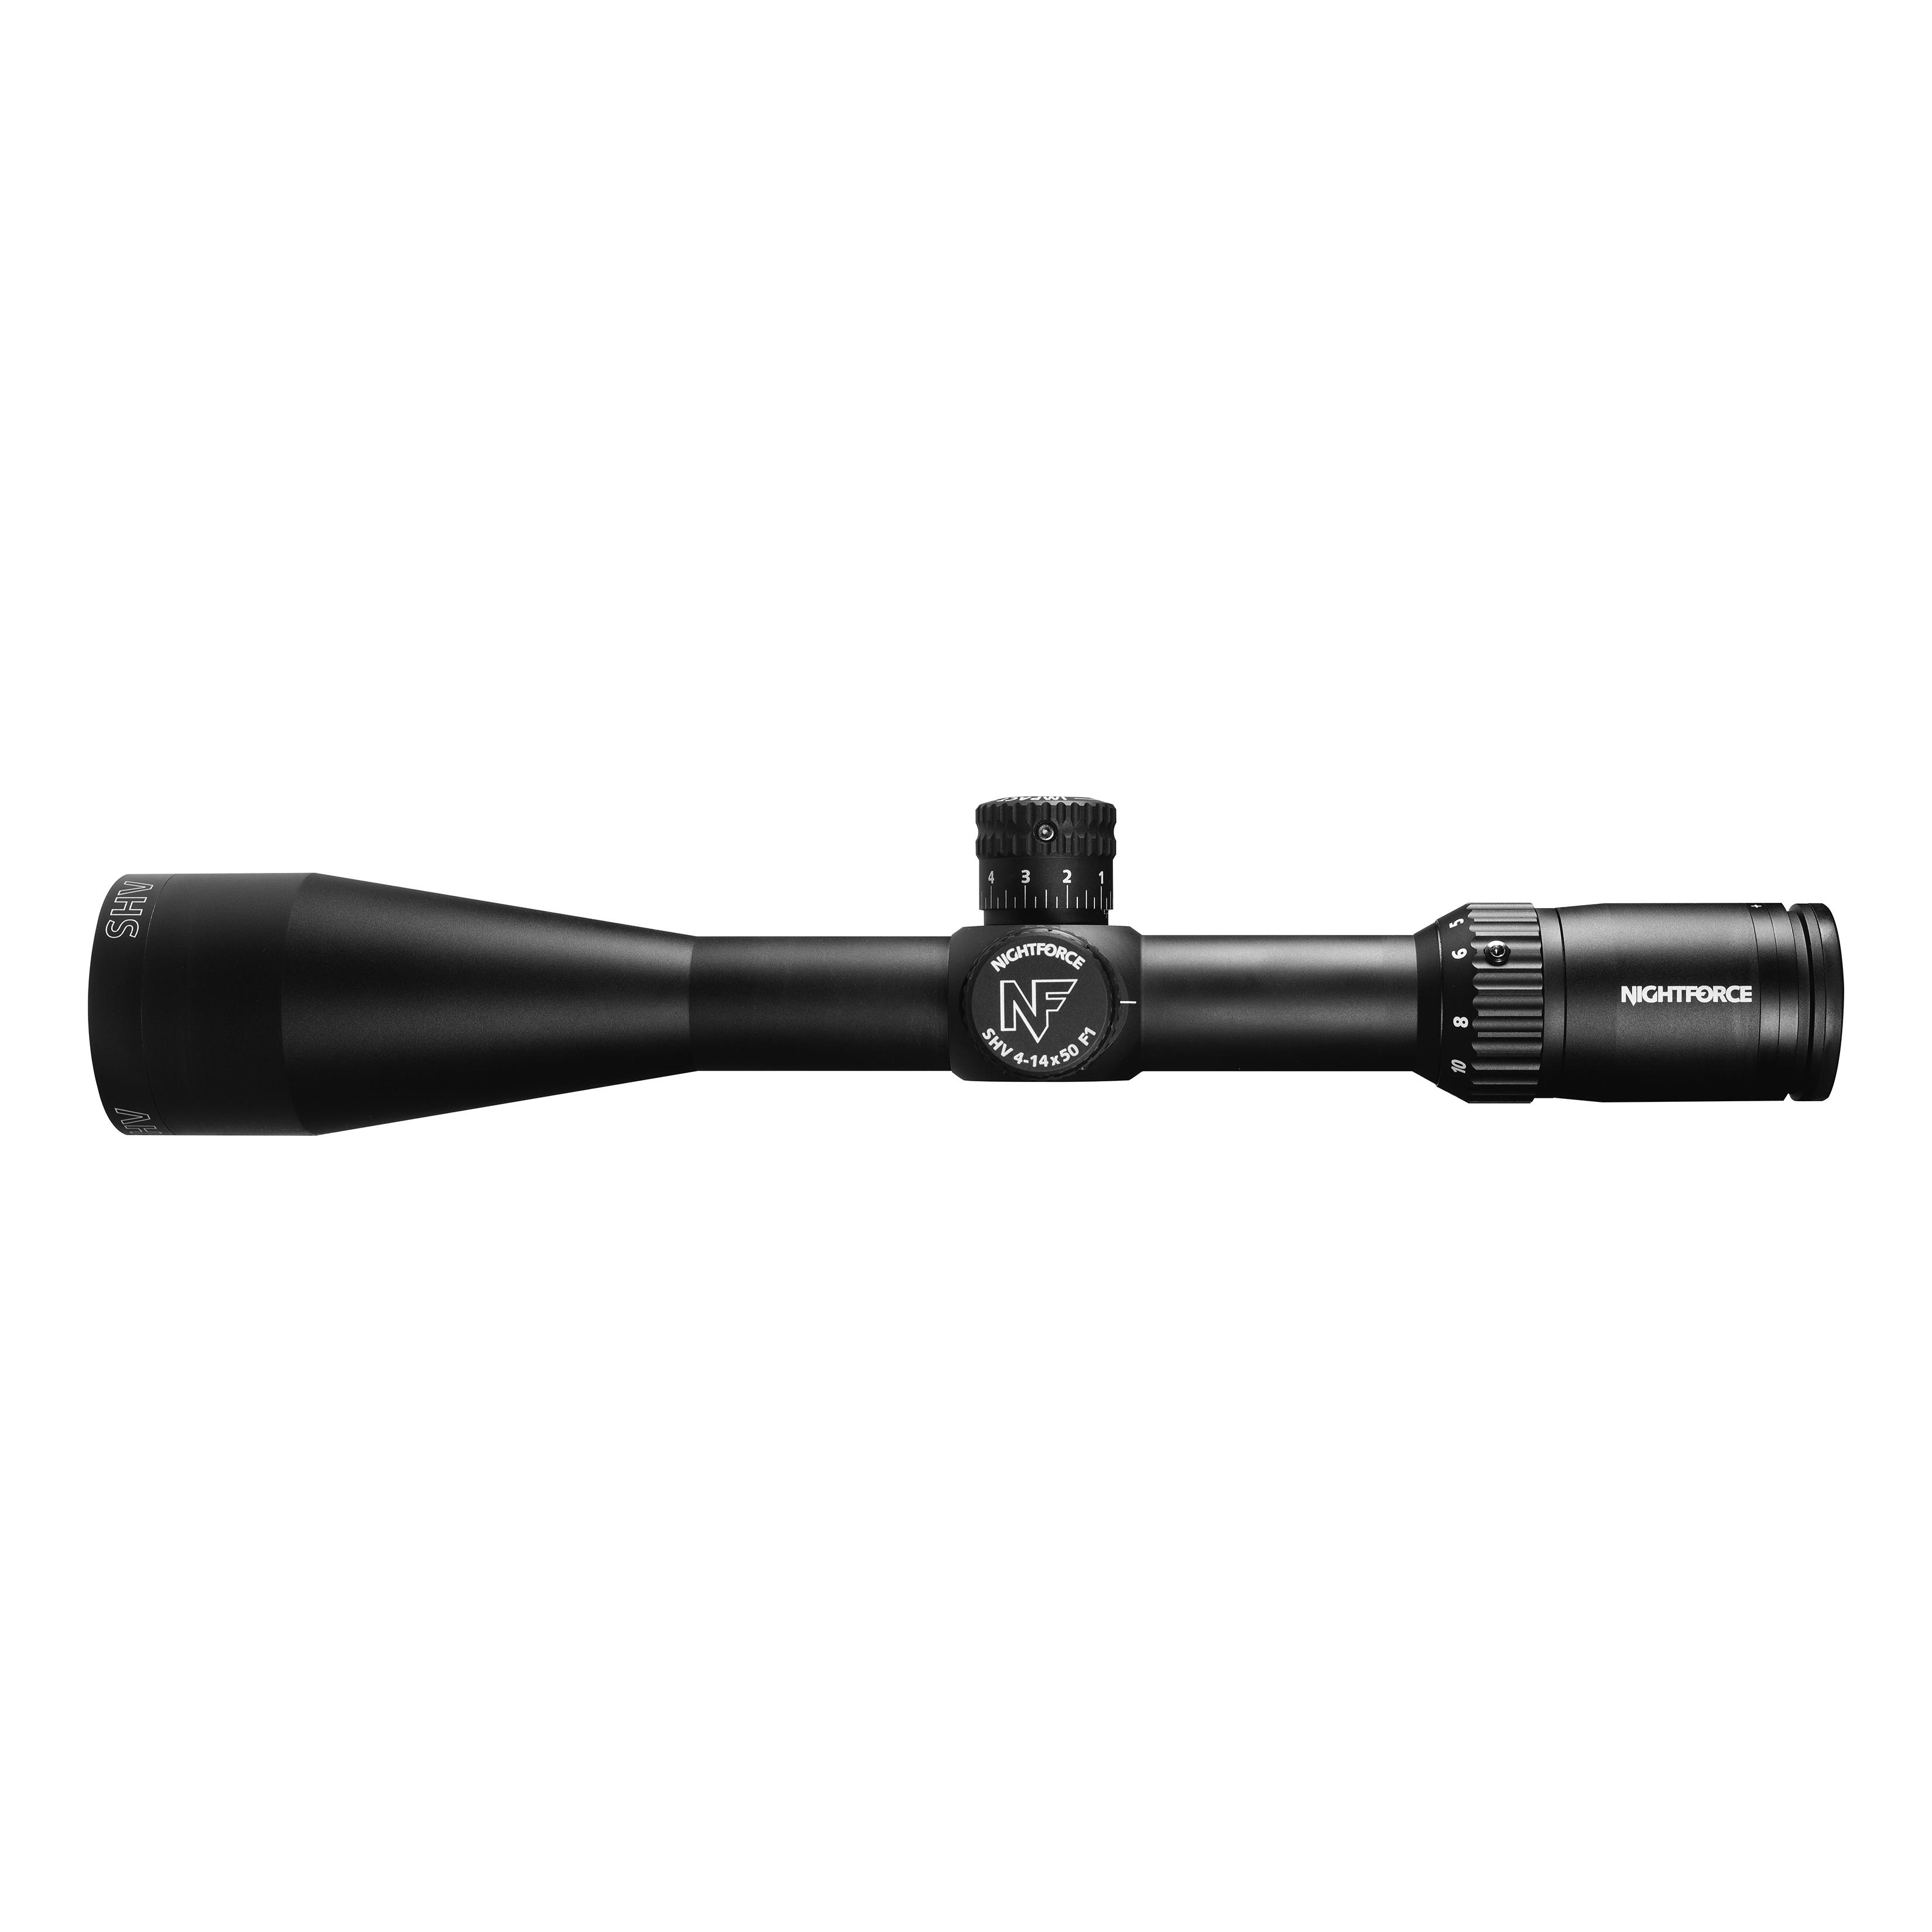 Nightforce® 30mm SHV 4-14x50 Riflescope - side